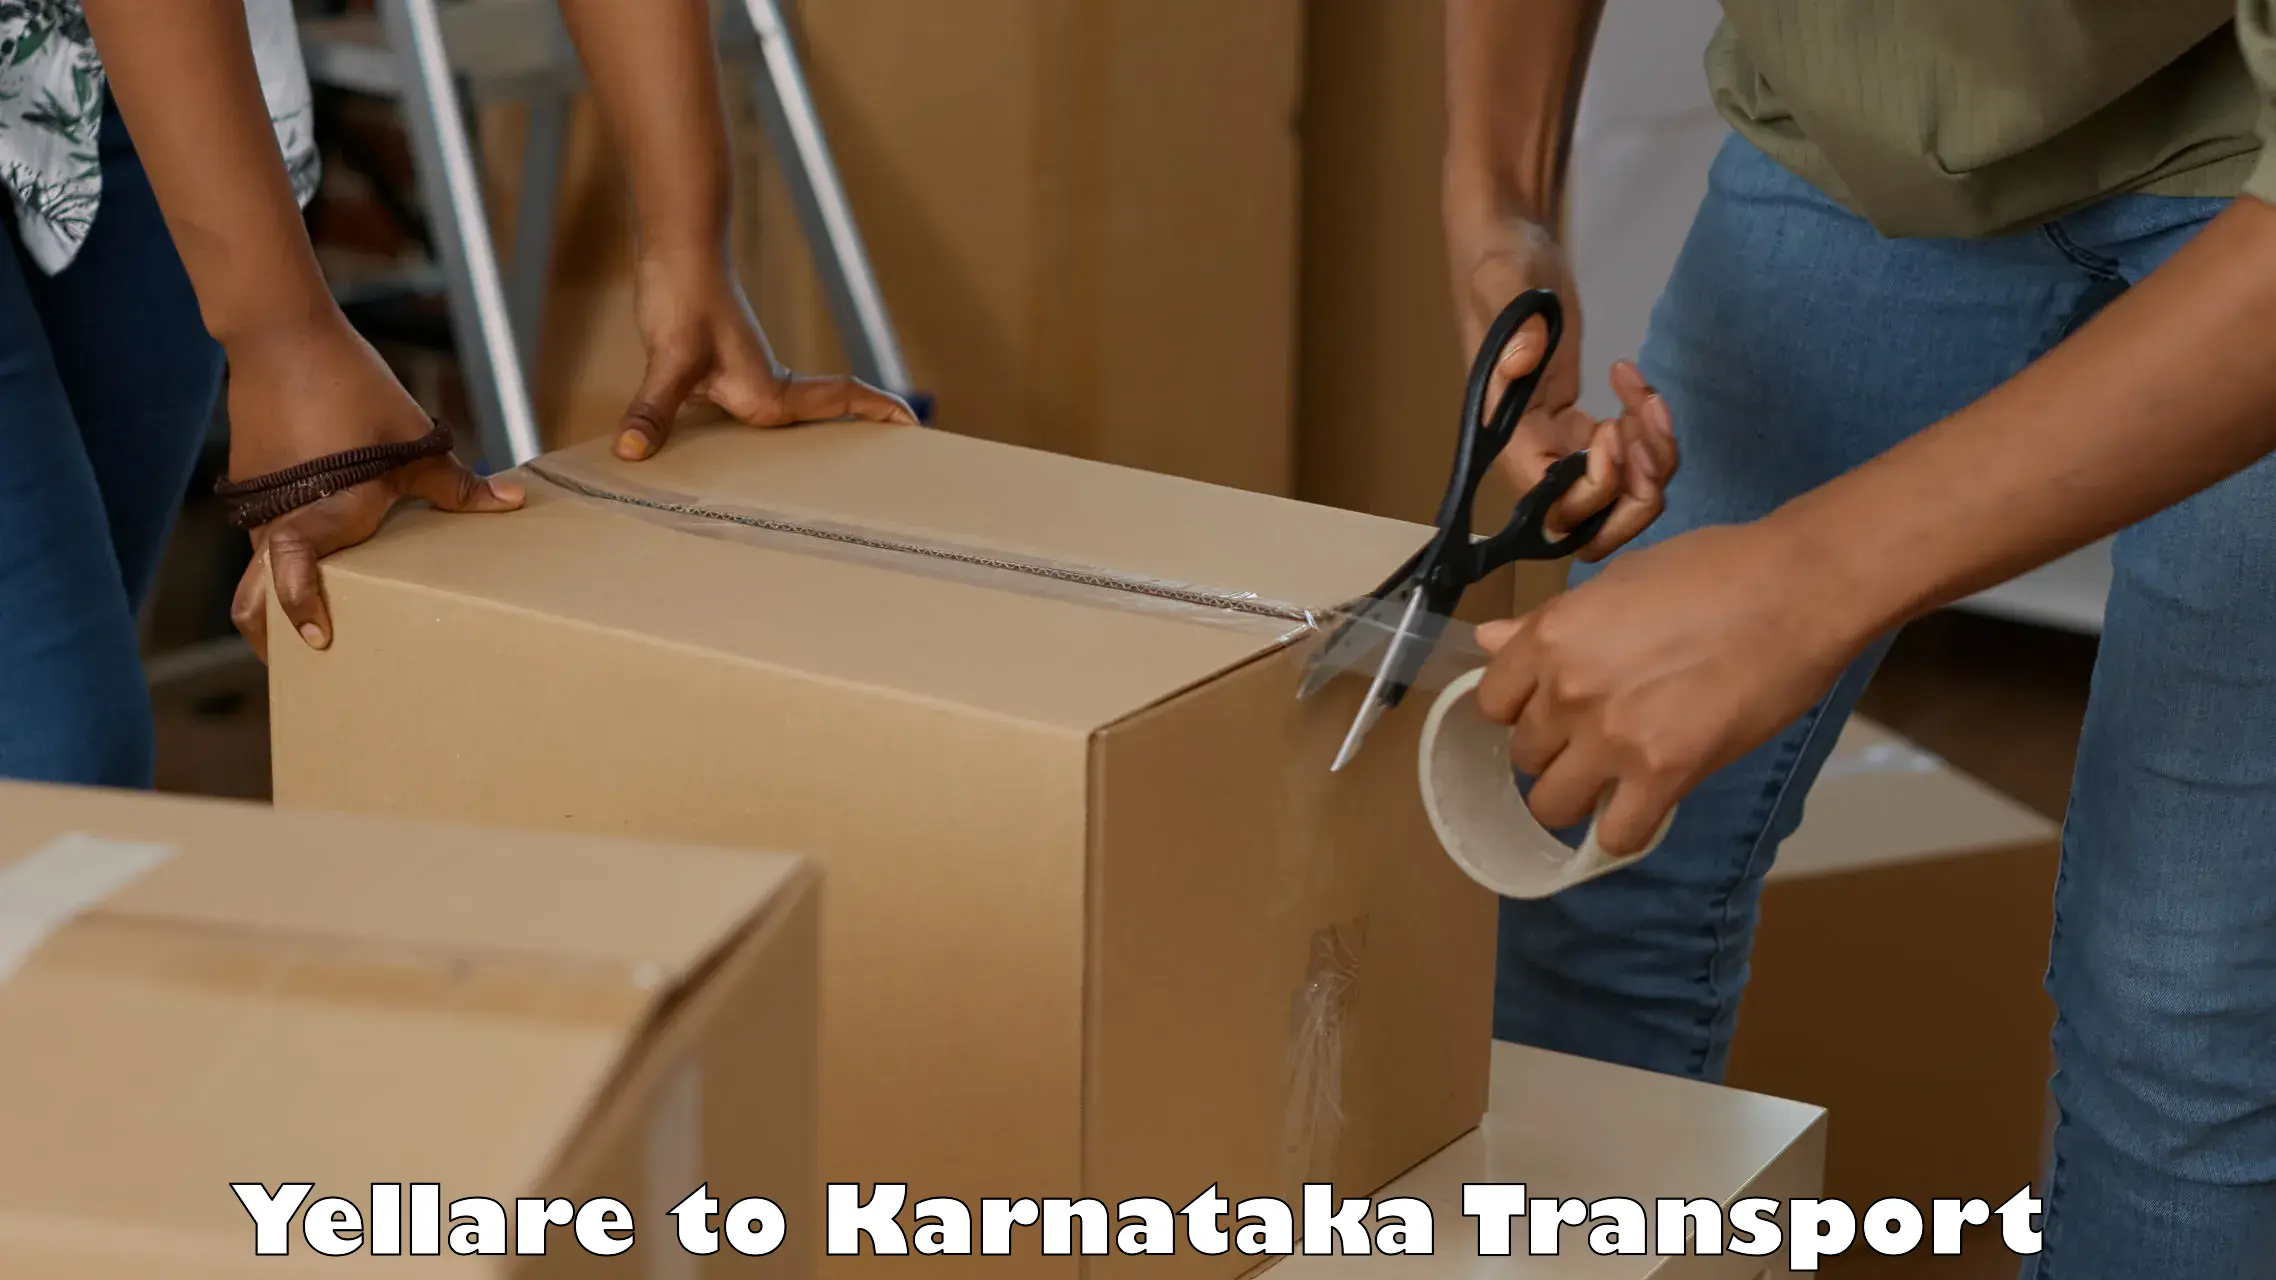 Cargo train transport services Yellare to Karnataka